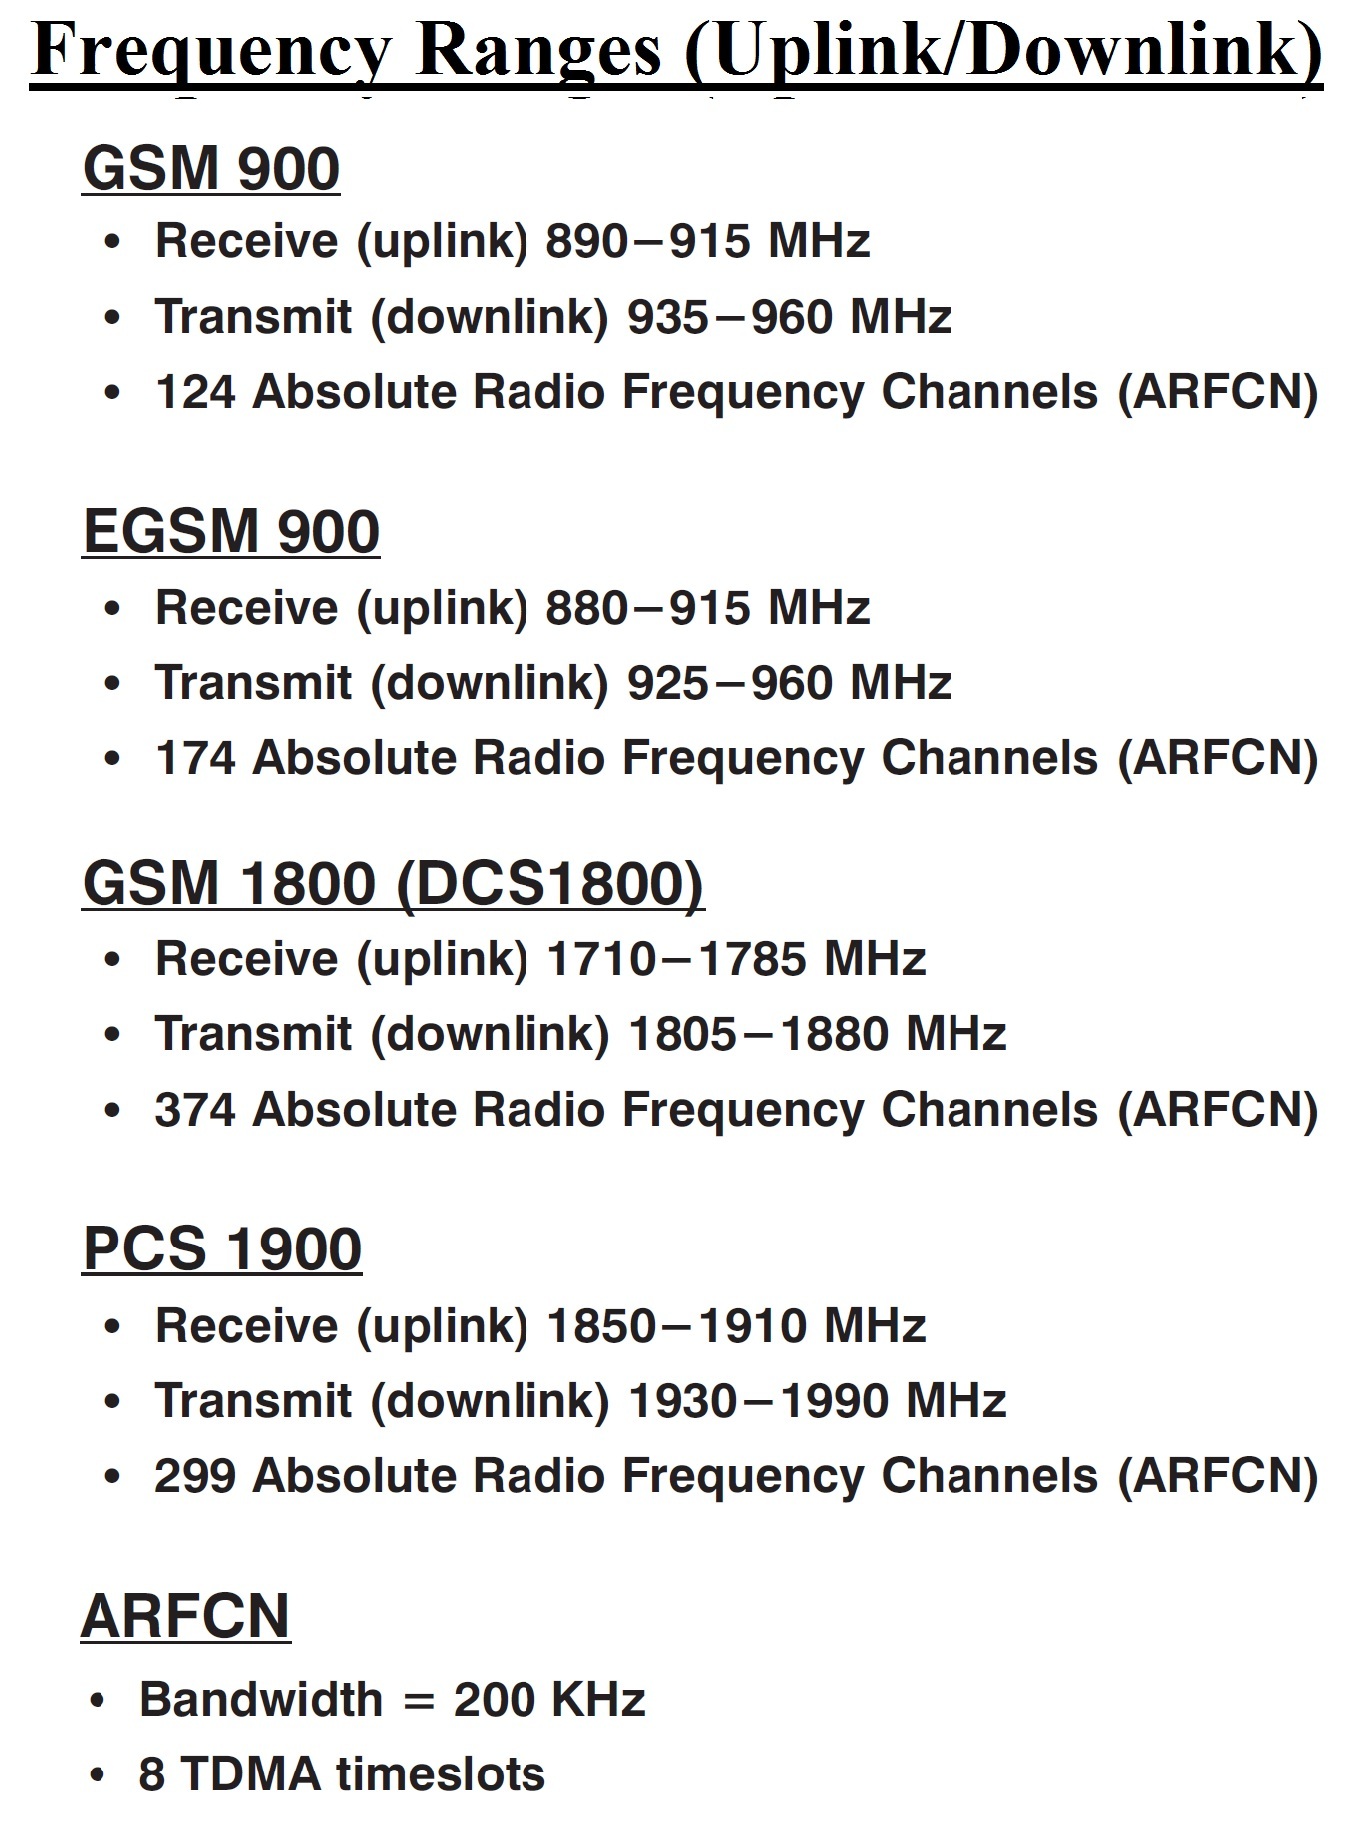 (Telecom) GSM Frequency Ranges (Uplink & Downlink)